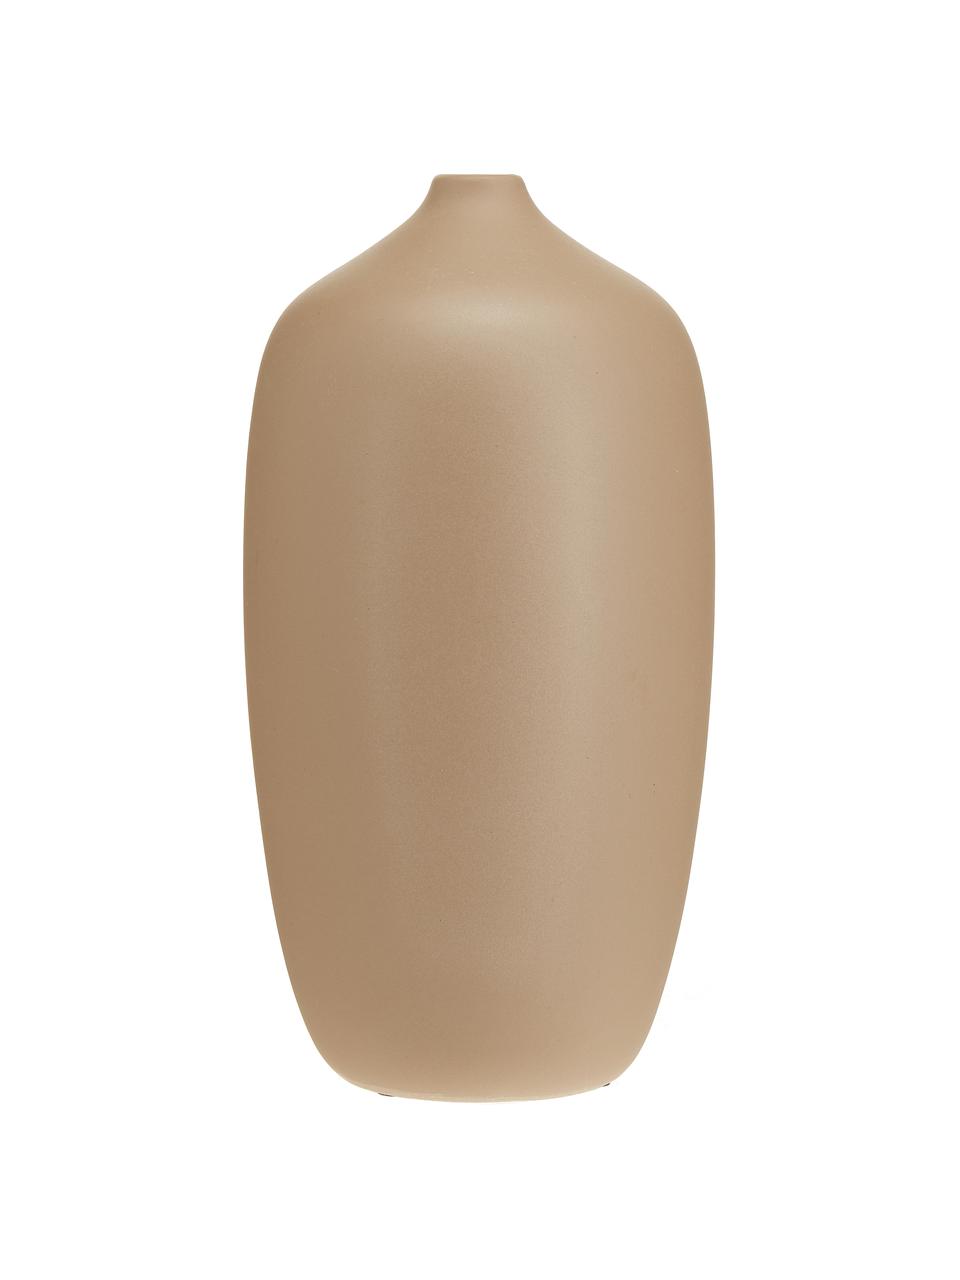 Große Keramik-Vase Ceola, Keramik, Beige, Ø 13 x H 25 cm